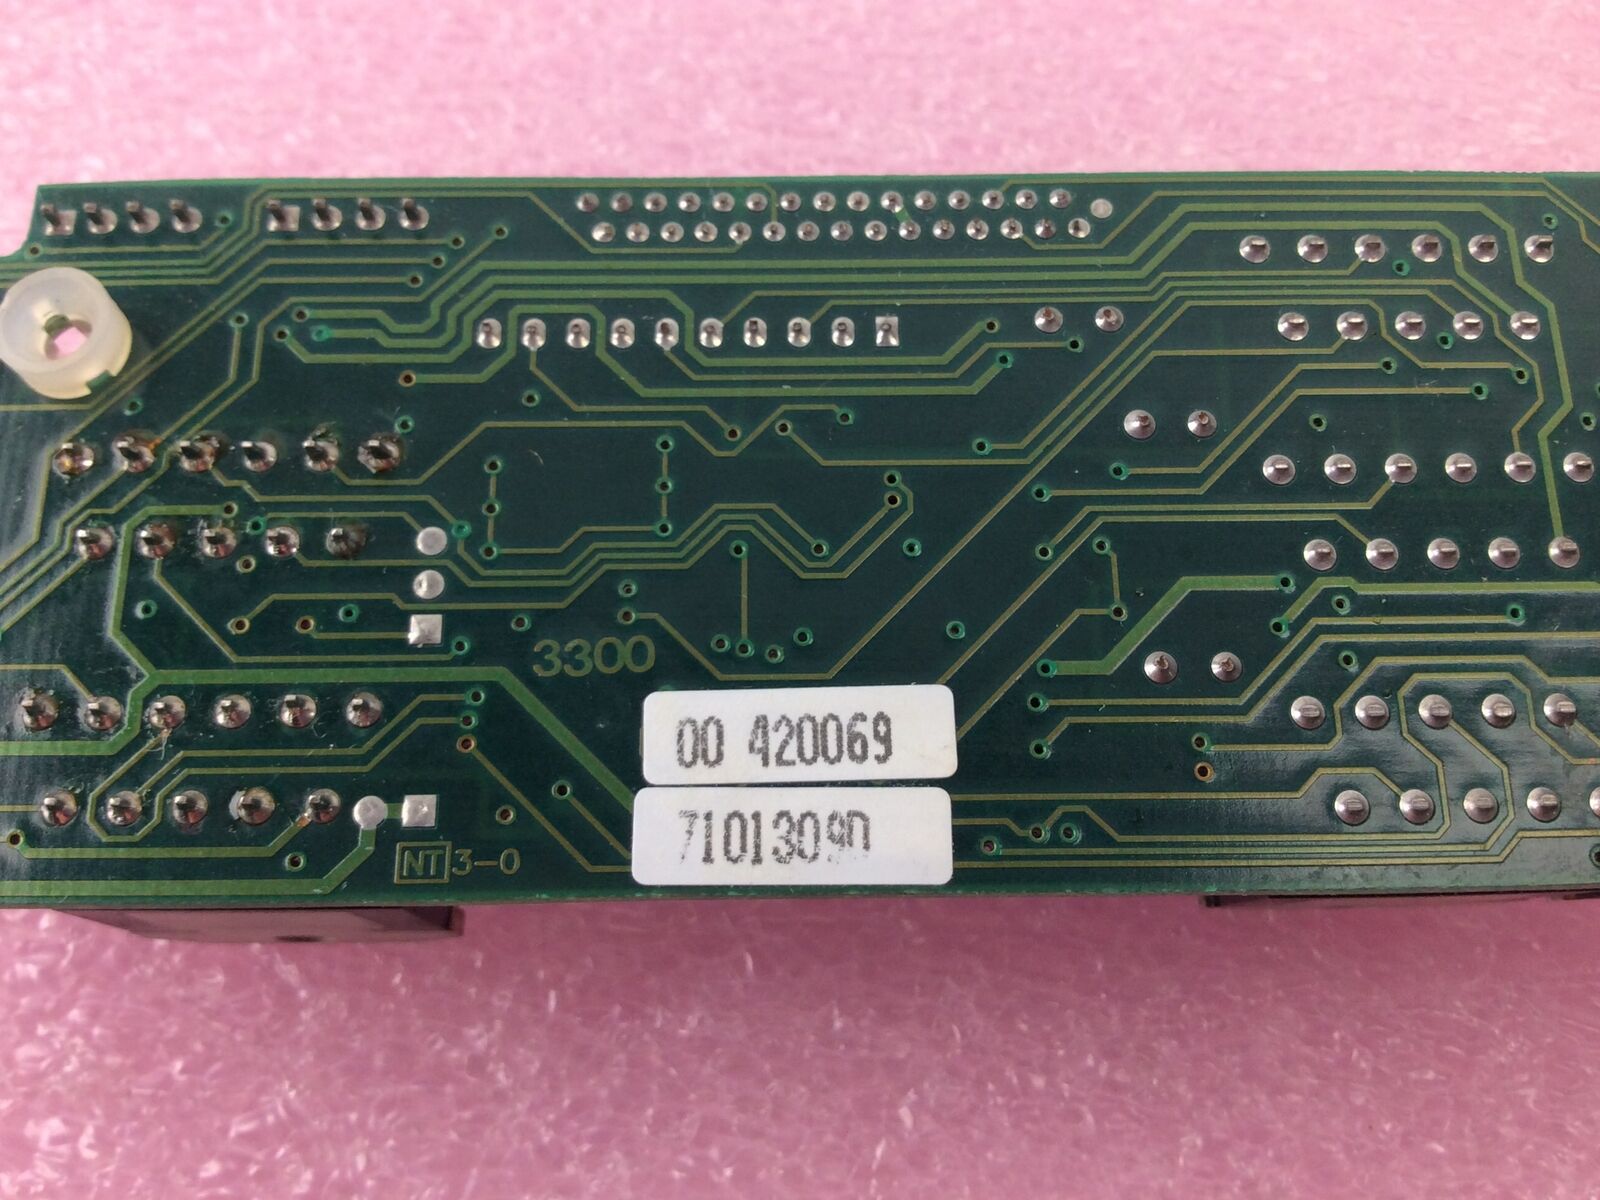 Packard MultiProbe II Handling System Controller Board - 7101309 - 7101310